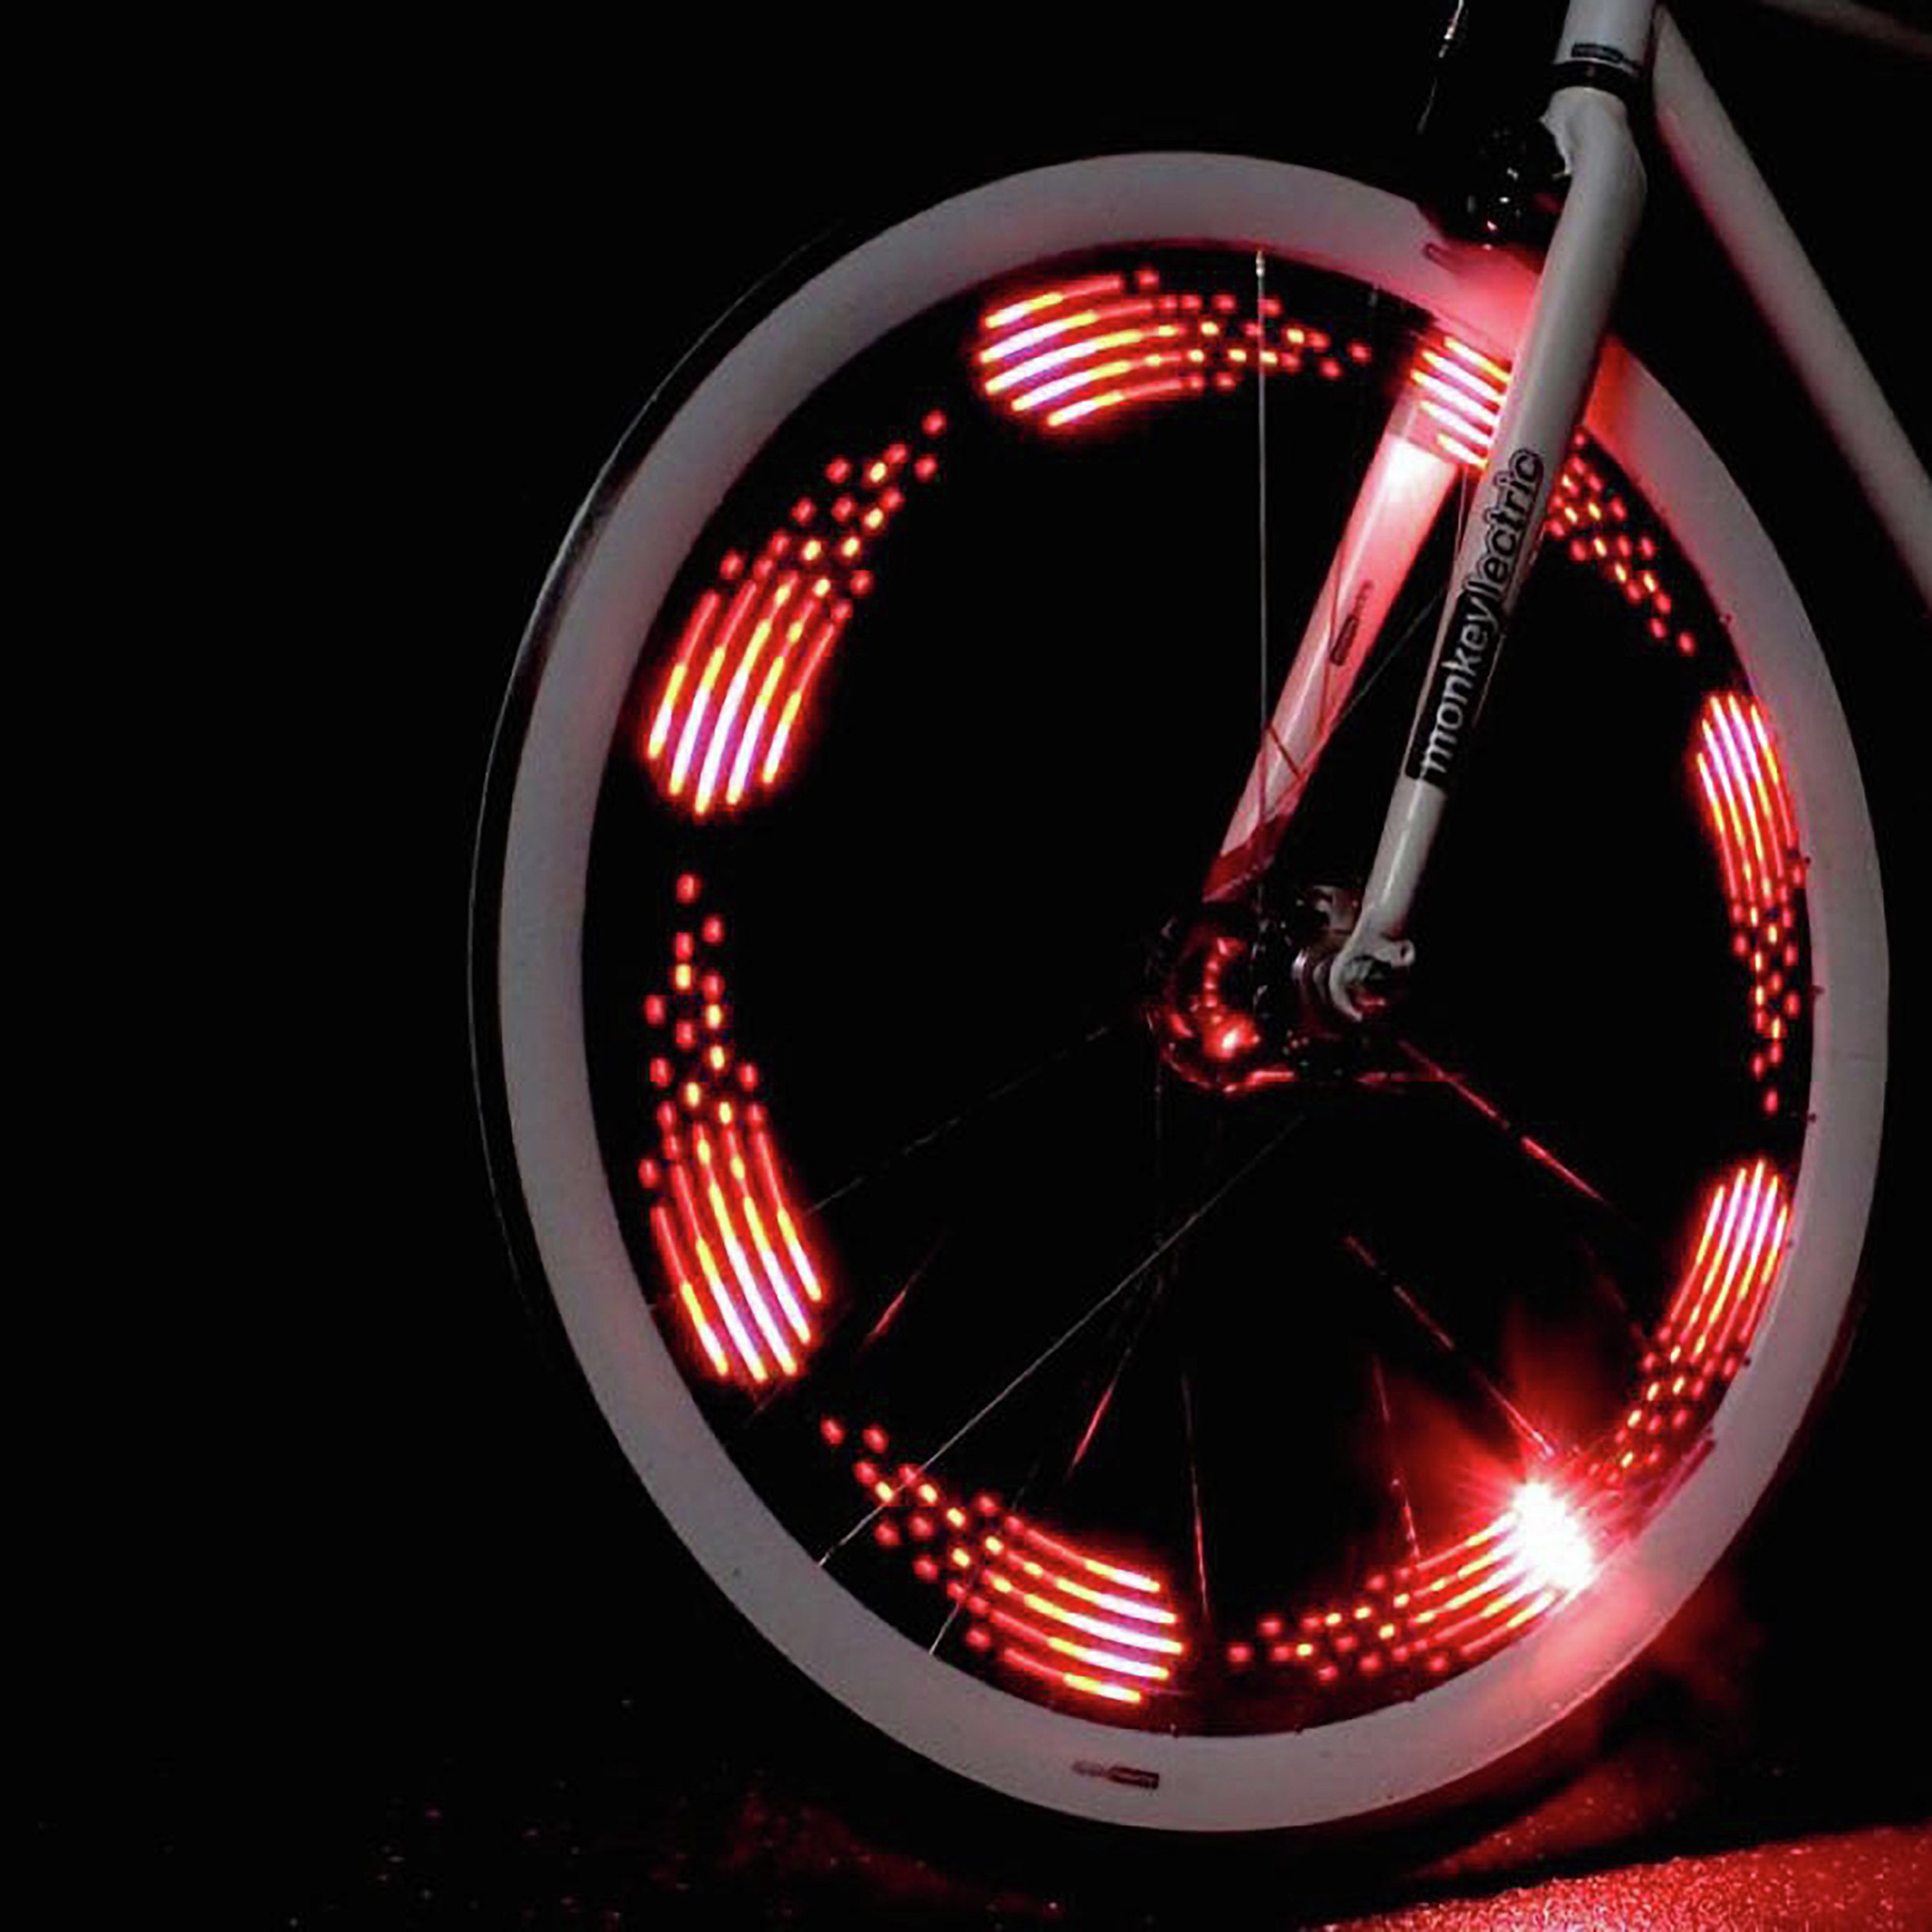 MonkeyLectric M210 80 Lumens Wheel Bike Light review